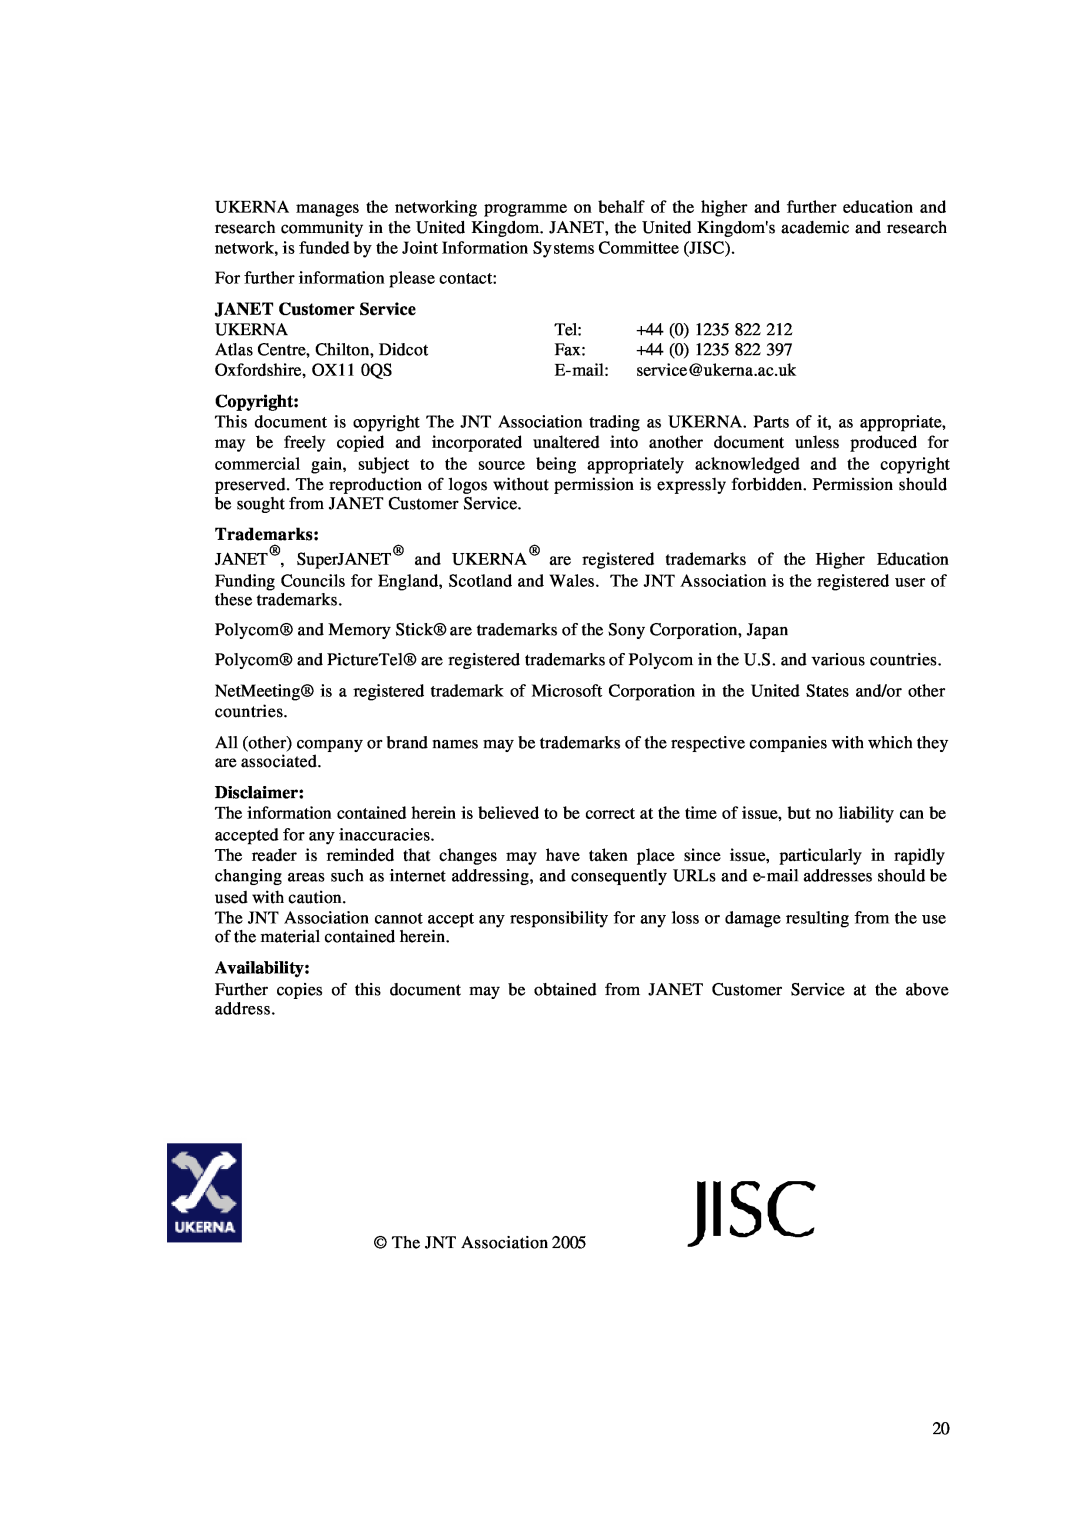 Polycom VSXTM 6000 appendix JANET Customer Service, Copyright, Trademarks, Disclaimer, Availability 